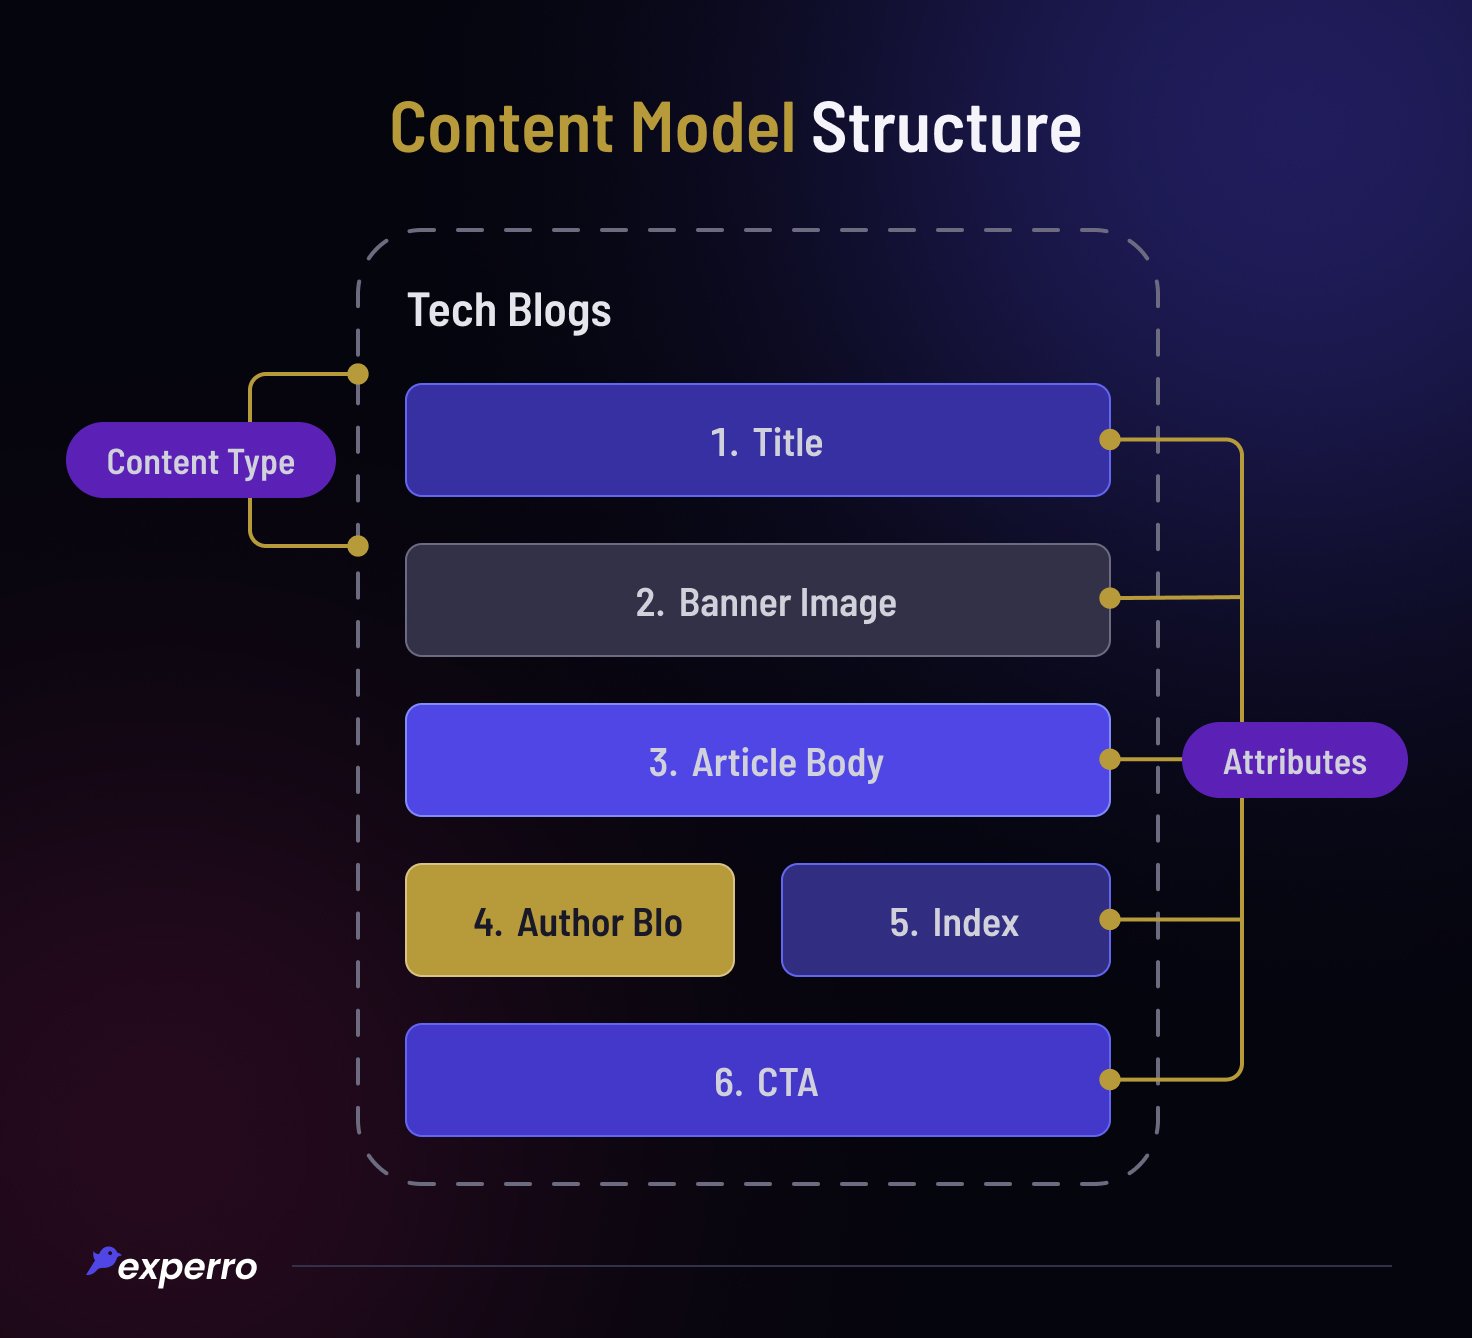 Content Model Structure Explained